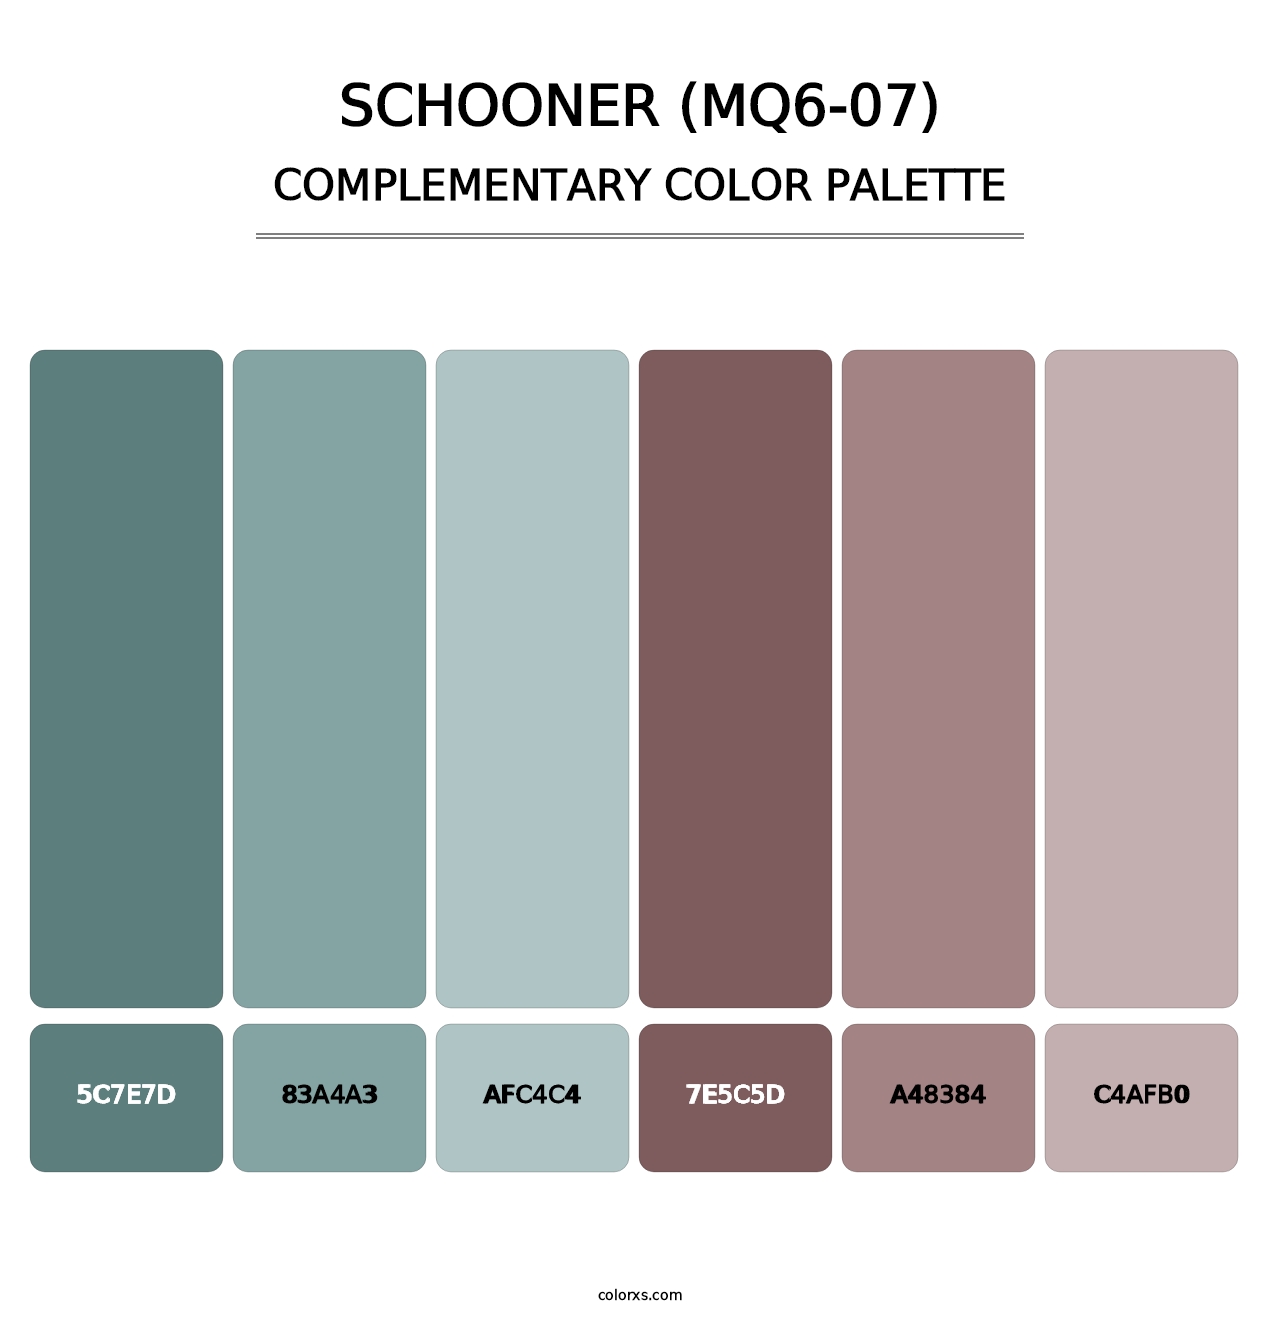 Schooner (MQ6-07) - Complementary Color Palette